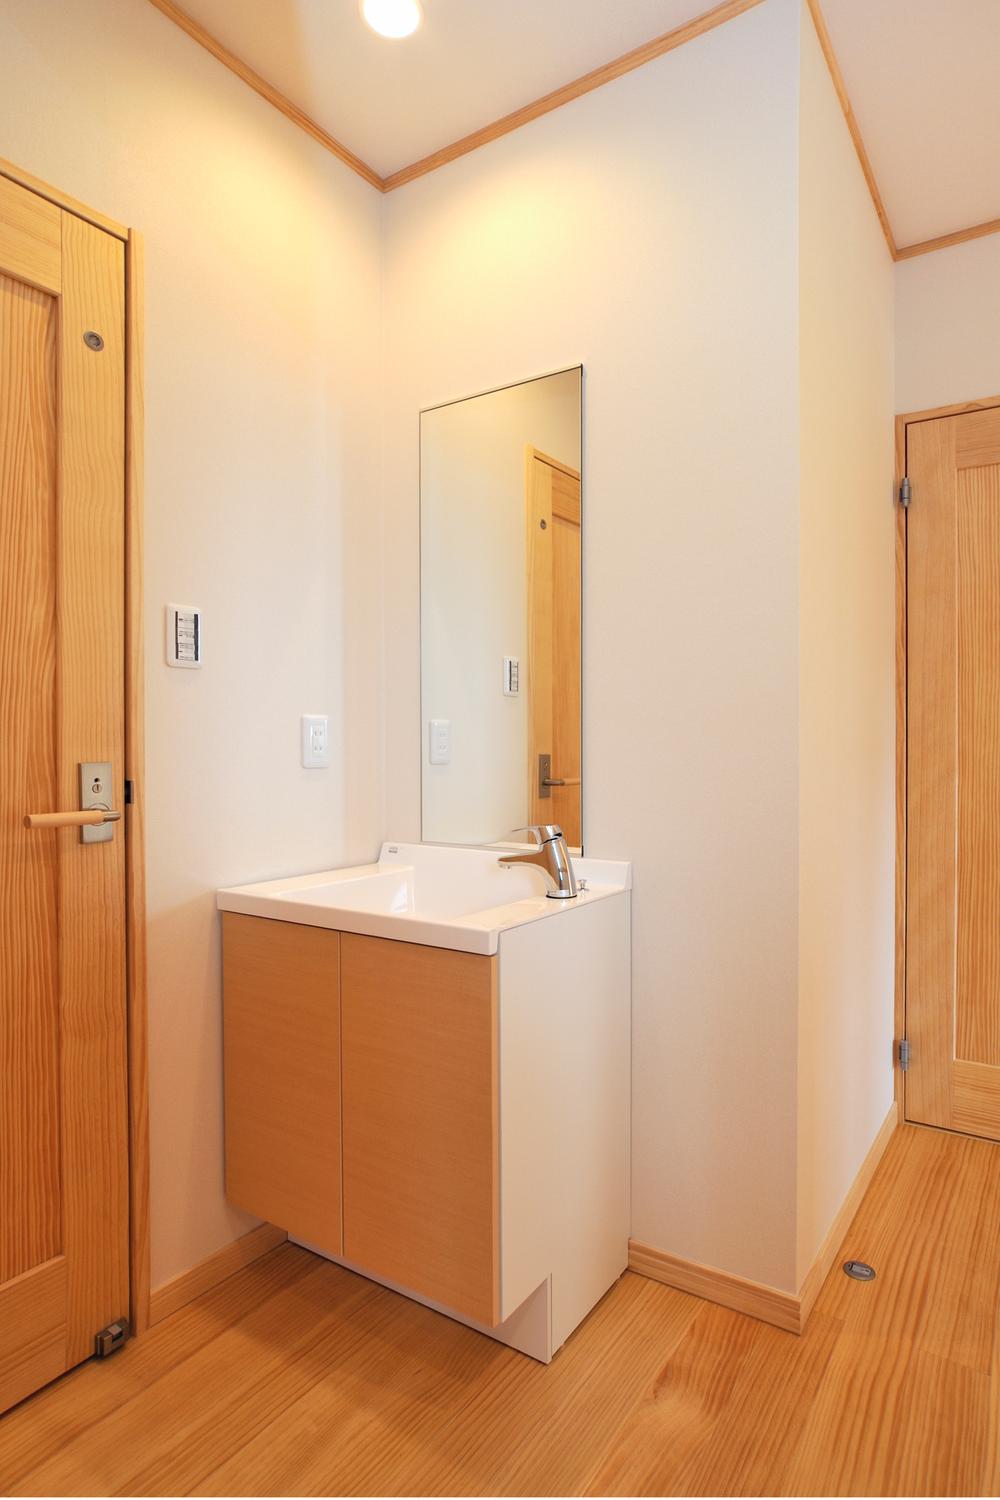 Wash basin, toilet. Second floor bathroom vanity